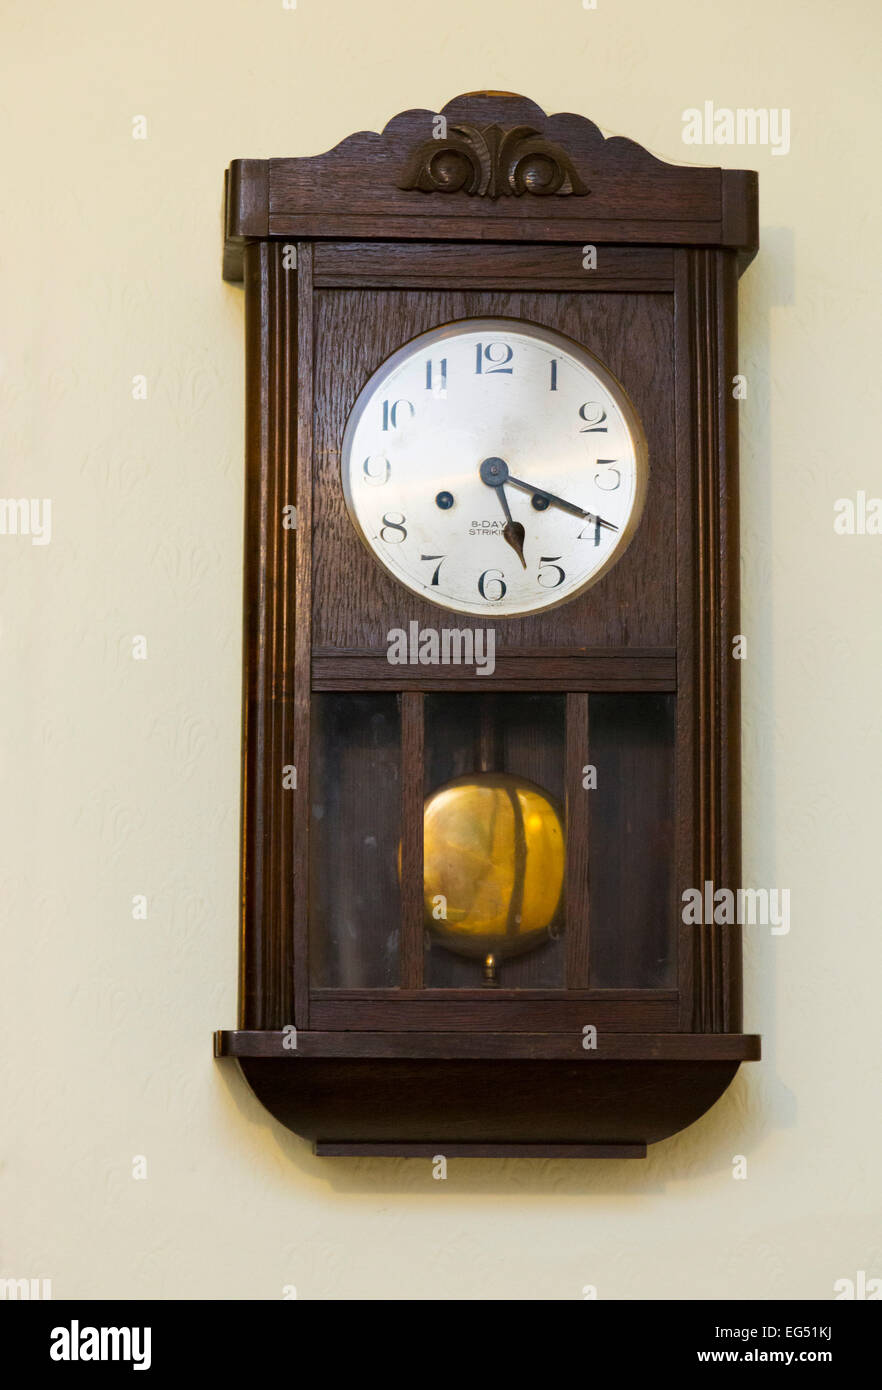 https://c8.alamy.com/comp/EG51KJ/antique-wall-mounted-pendulum-clock-EG51KJ.jpg